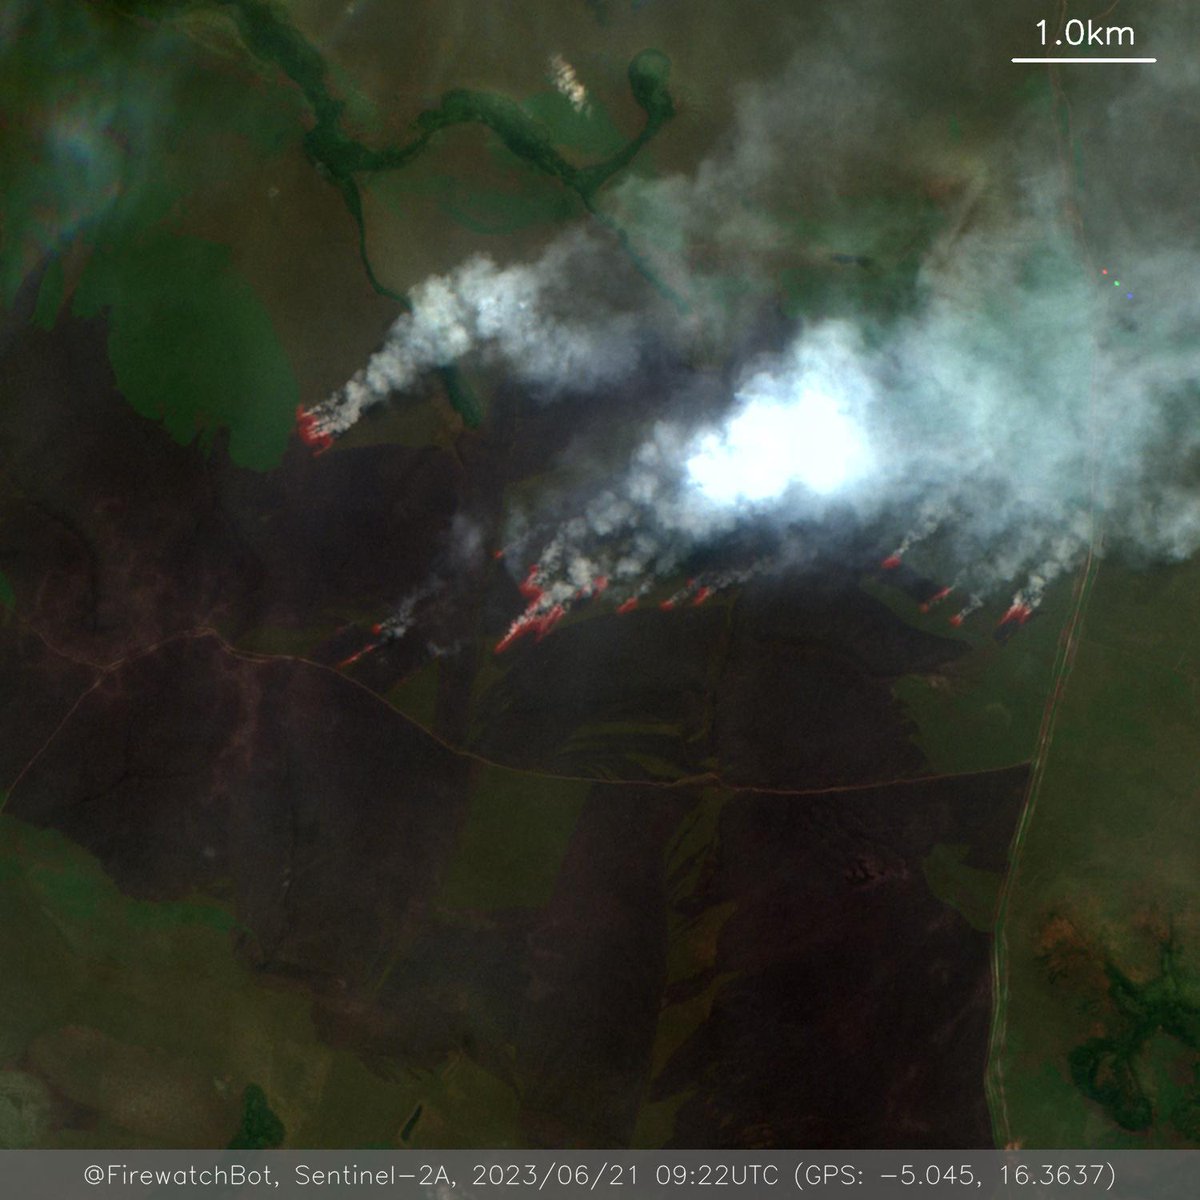 Fire detected from #Sentinel2

🗺 Place: Kenge, Kwango, #DemocraticRepublicoftheCongo
🕛 Date: 2023/06/21 09:22UTC

View location: maps.google.com/?q=-5.04502920… (-5.045, 16.3637)